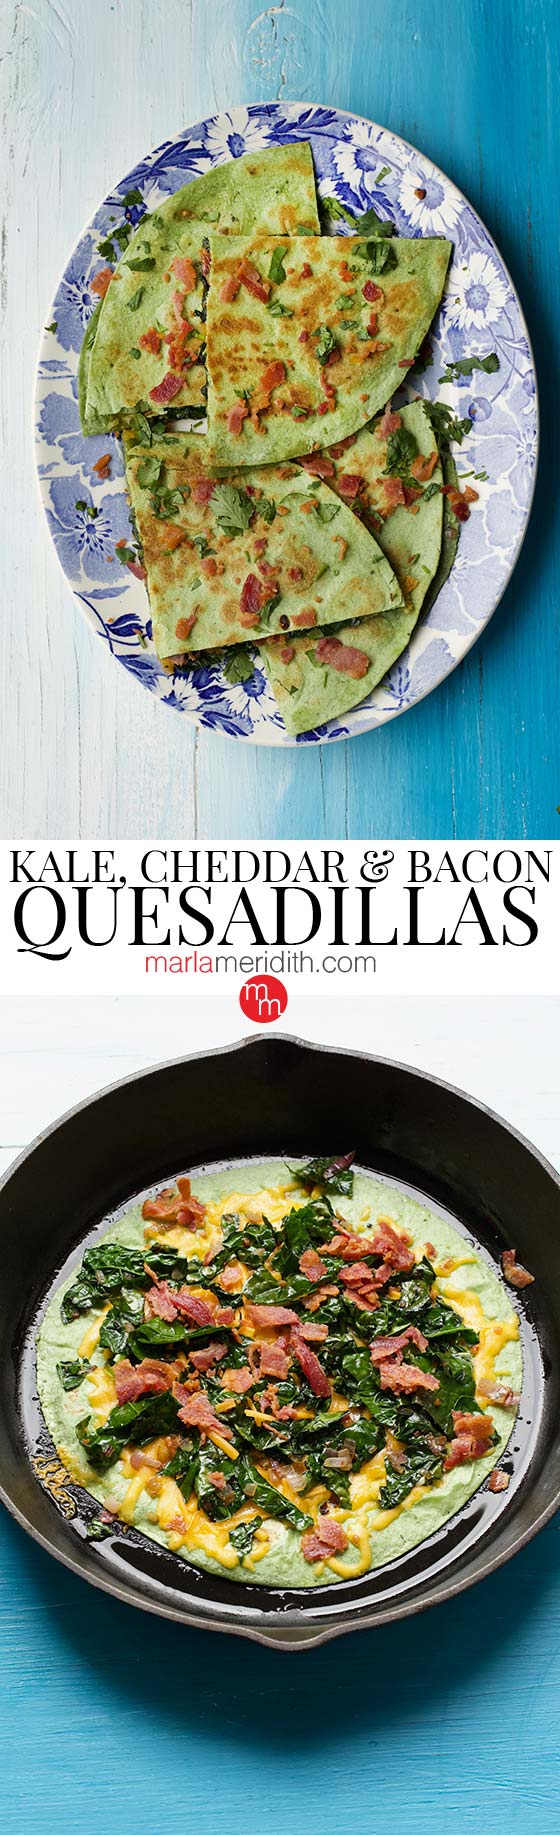 Kale, Bacon & Cheddar Quesadillas recipe on MarlaMeridith.com #recipe #bacon #quesadillas